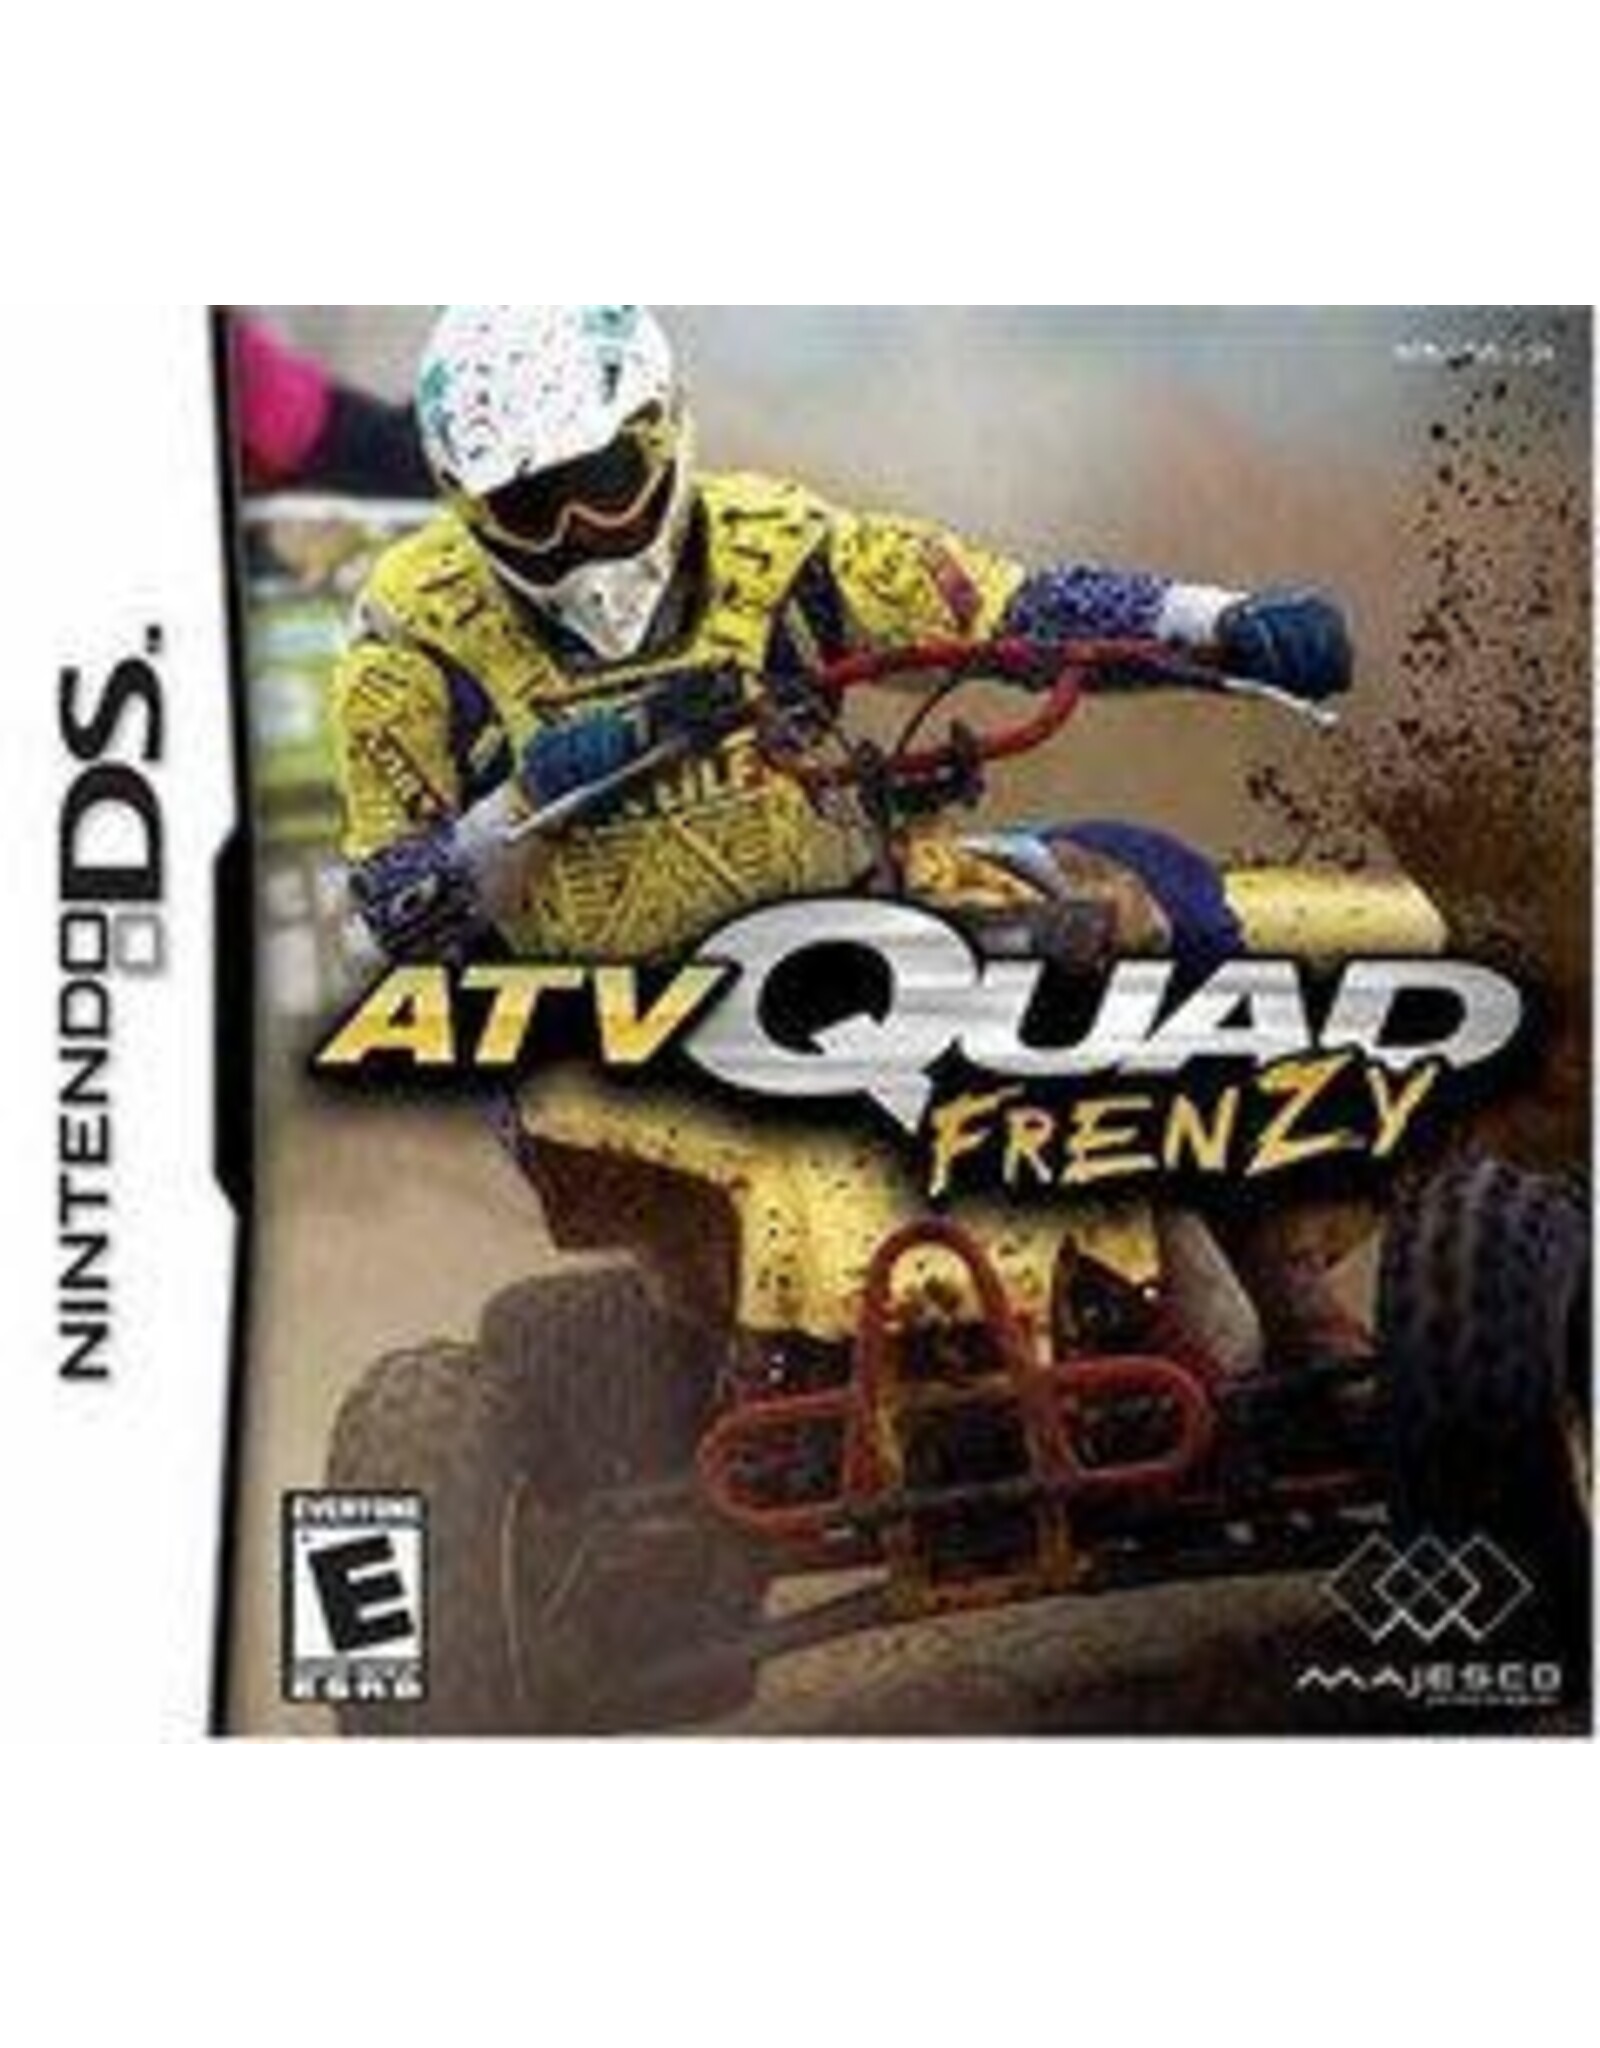 Nintendo DS ATV Quad Frenzy (CiB, Heavily Damaged Sleeve)